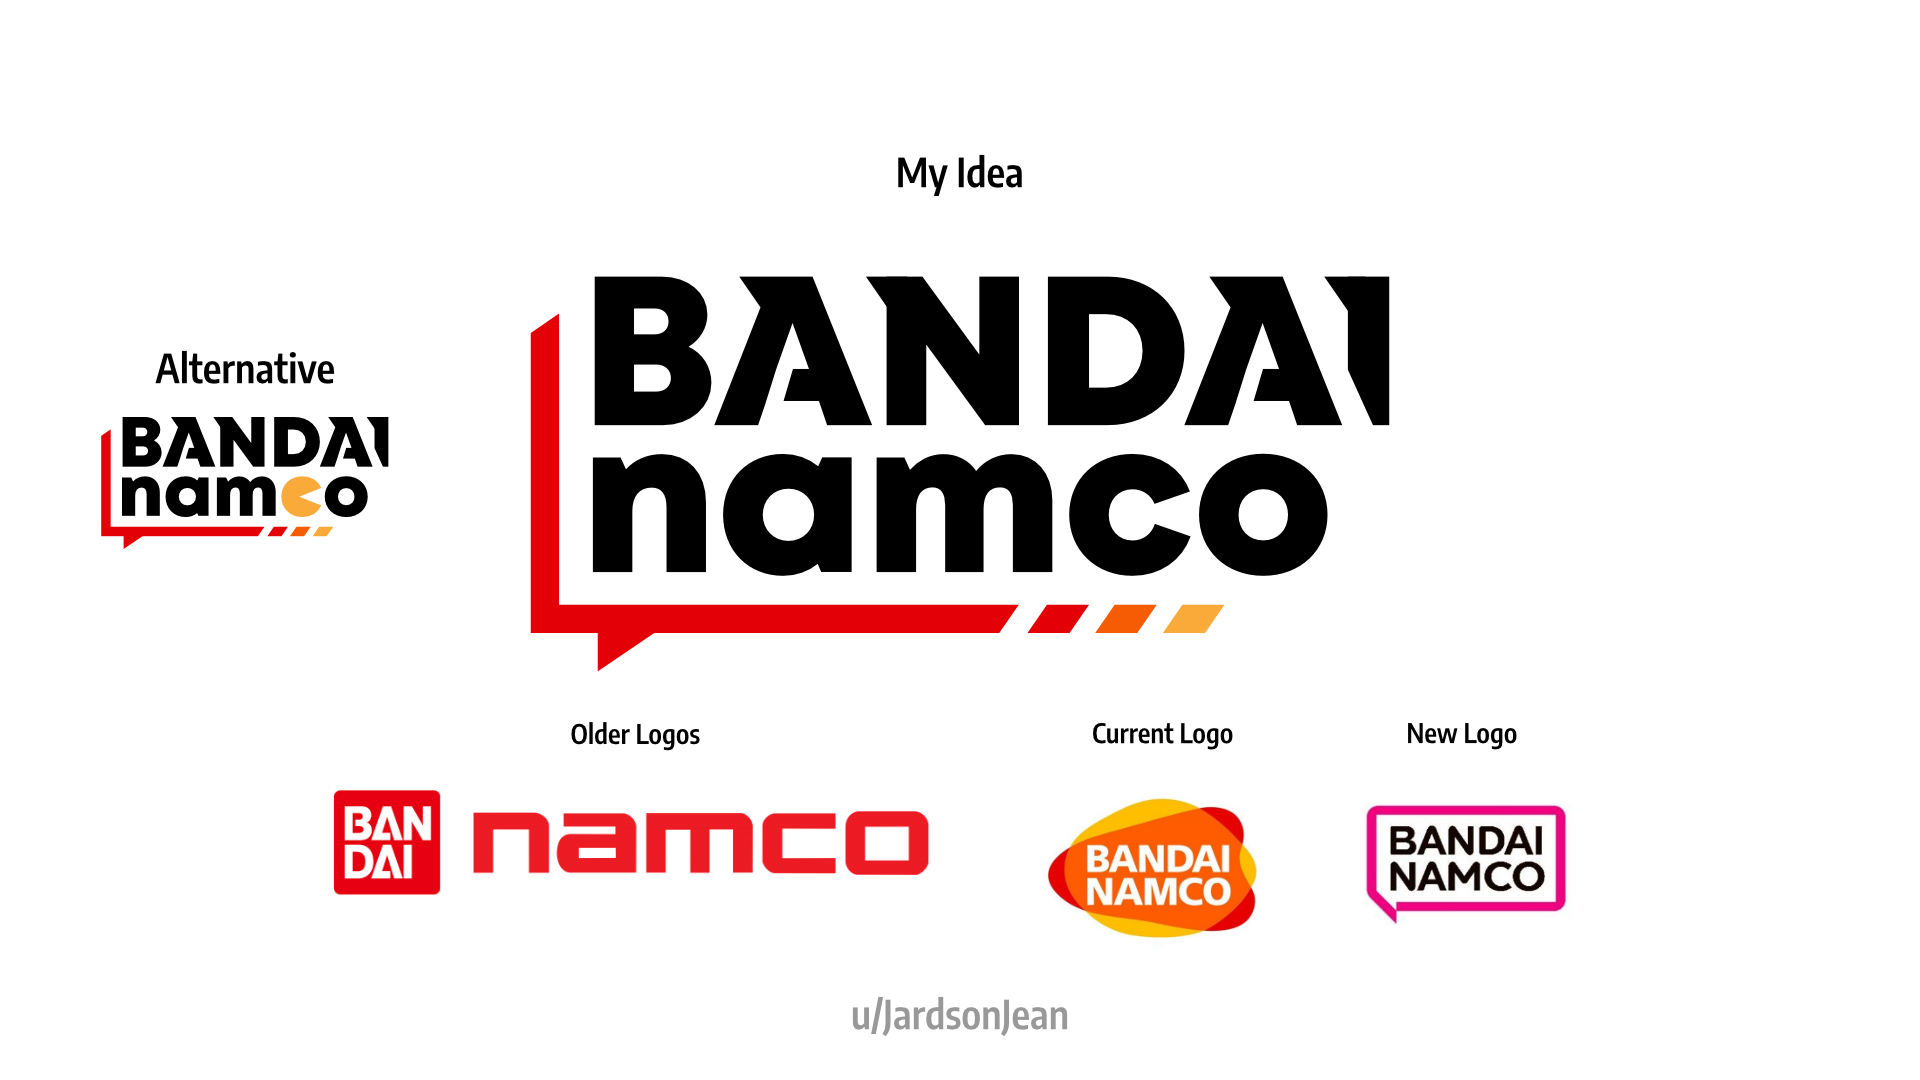 I Like Bandai Namco’s New Logo